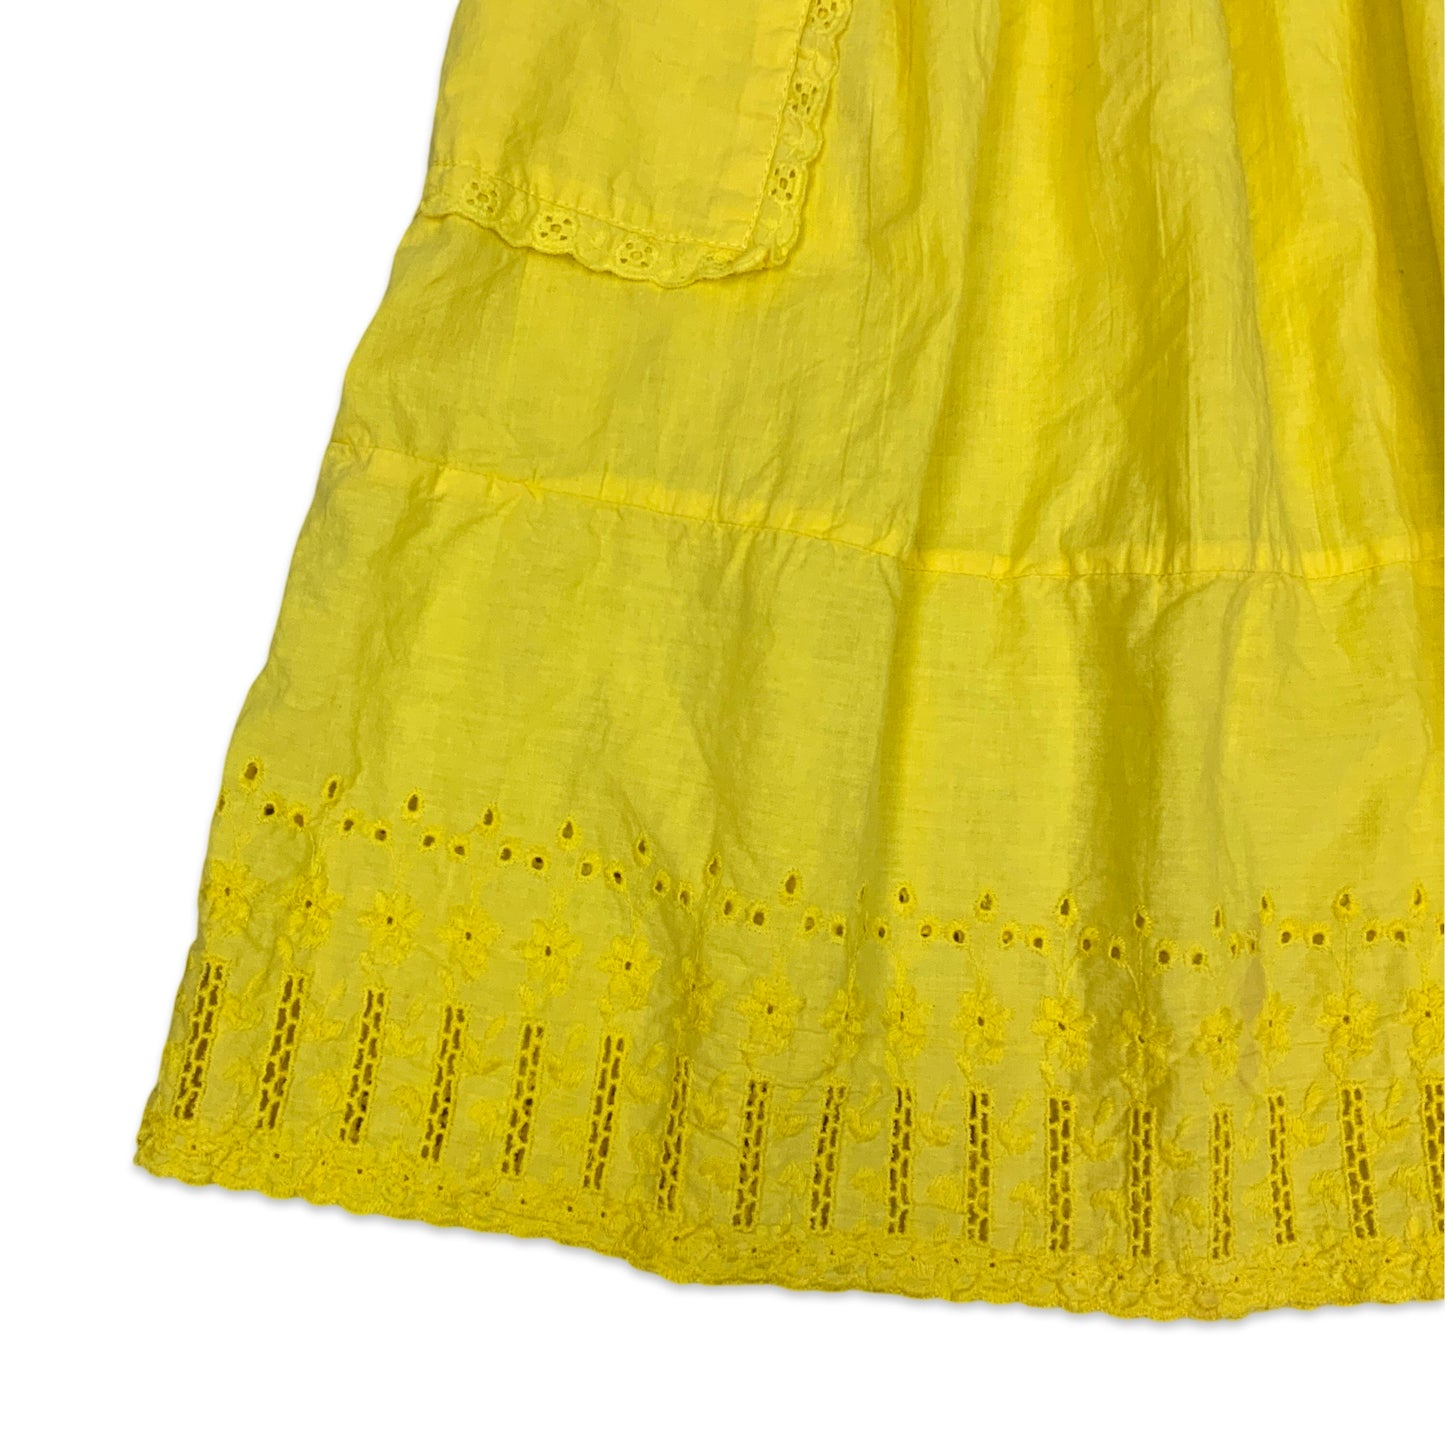 Vintage Yellow Knee Length Skirt 4-10